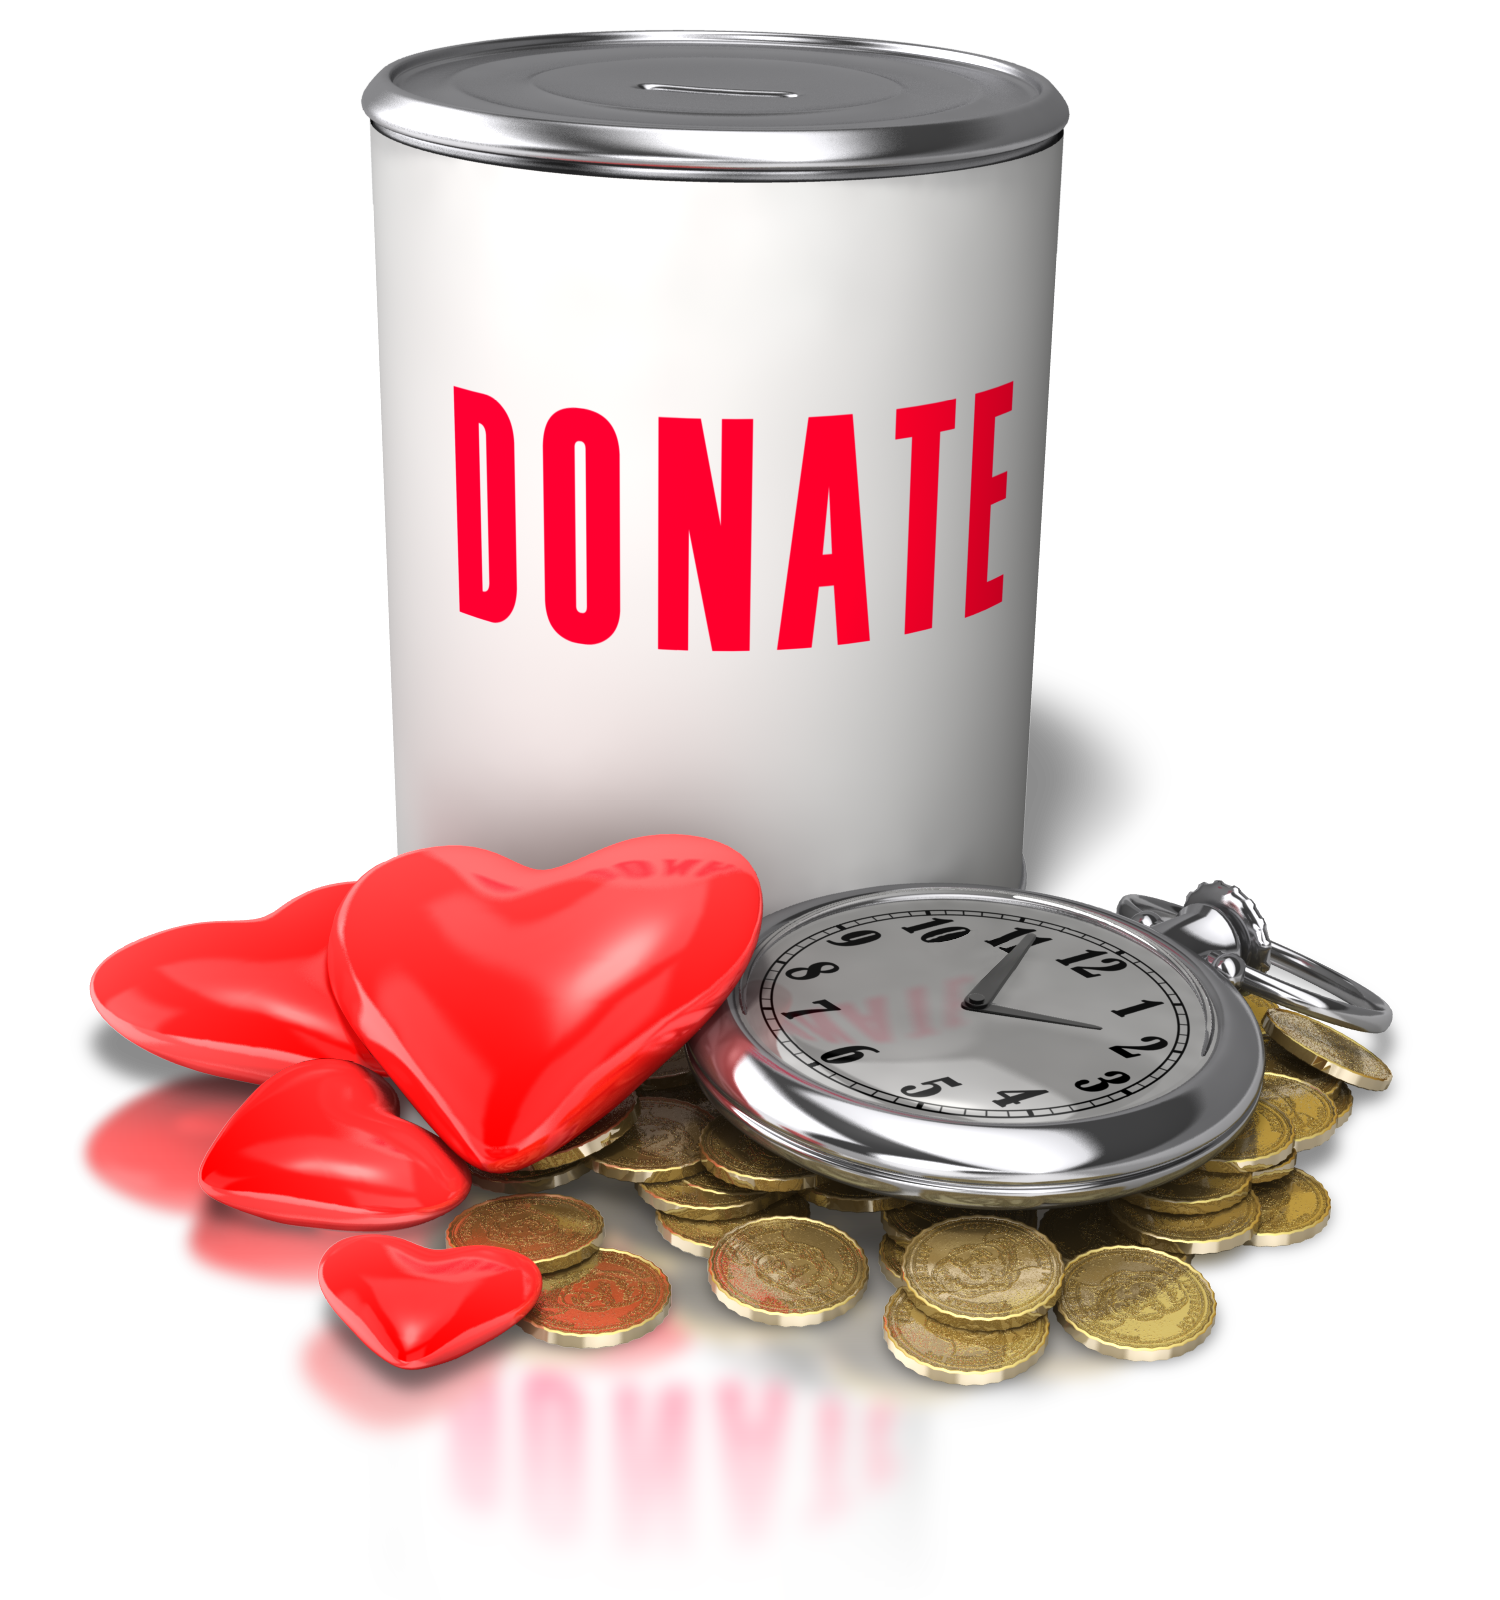 donation clipart money donation